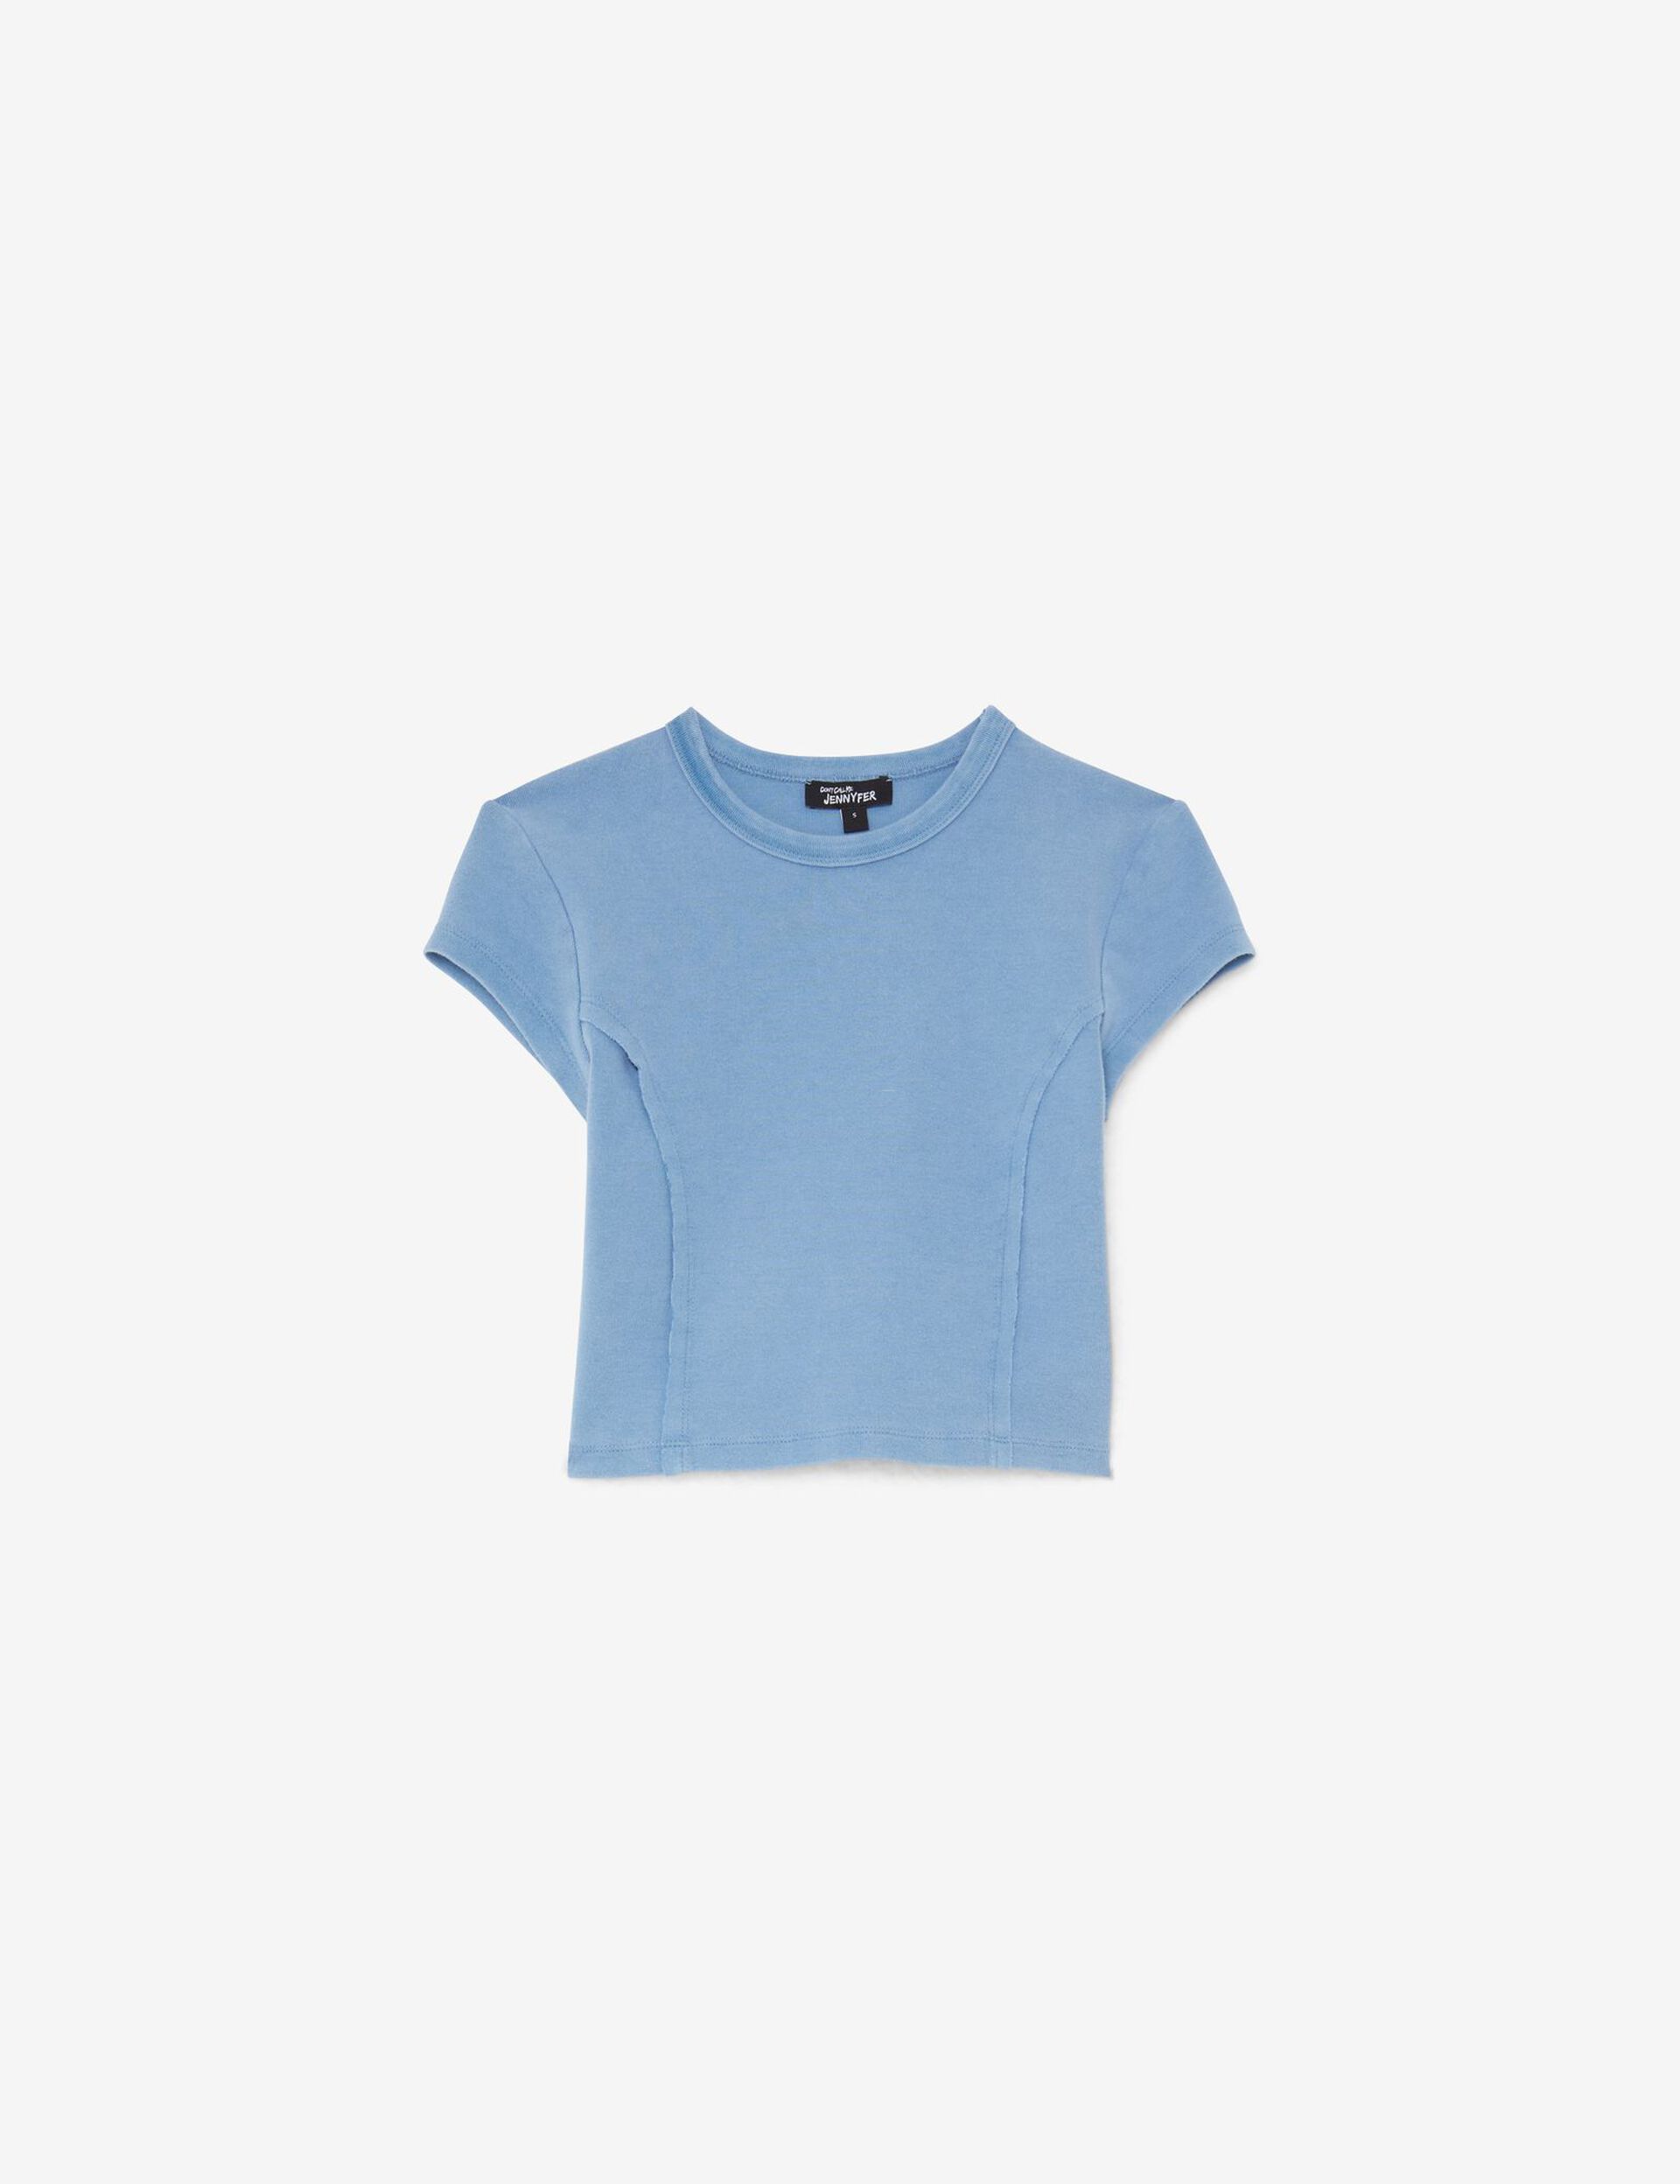 Tee-shirt court avec découpes bleu ciel